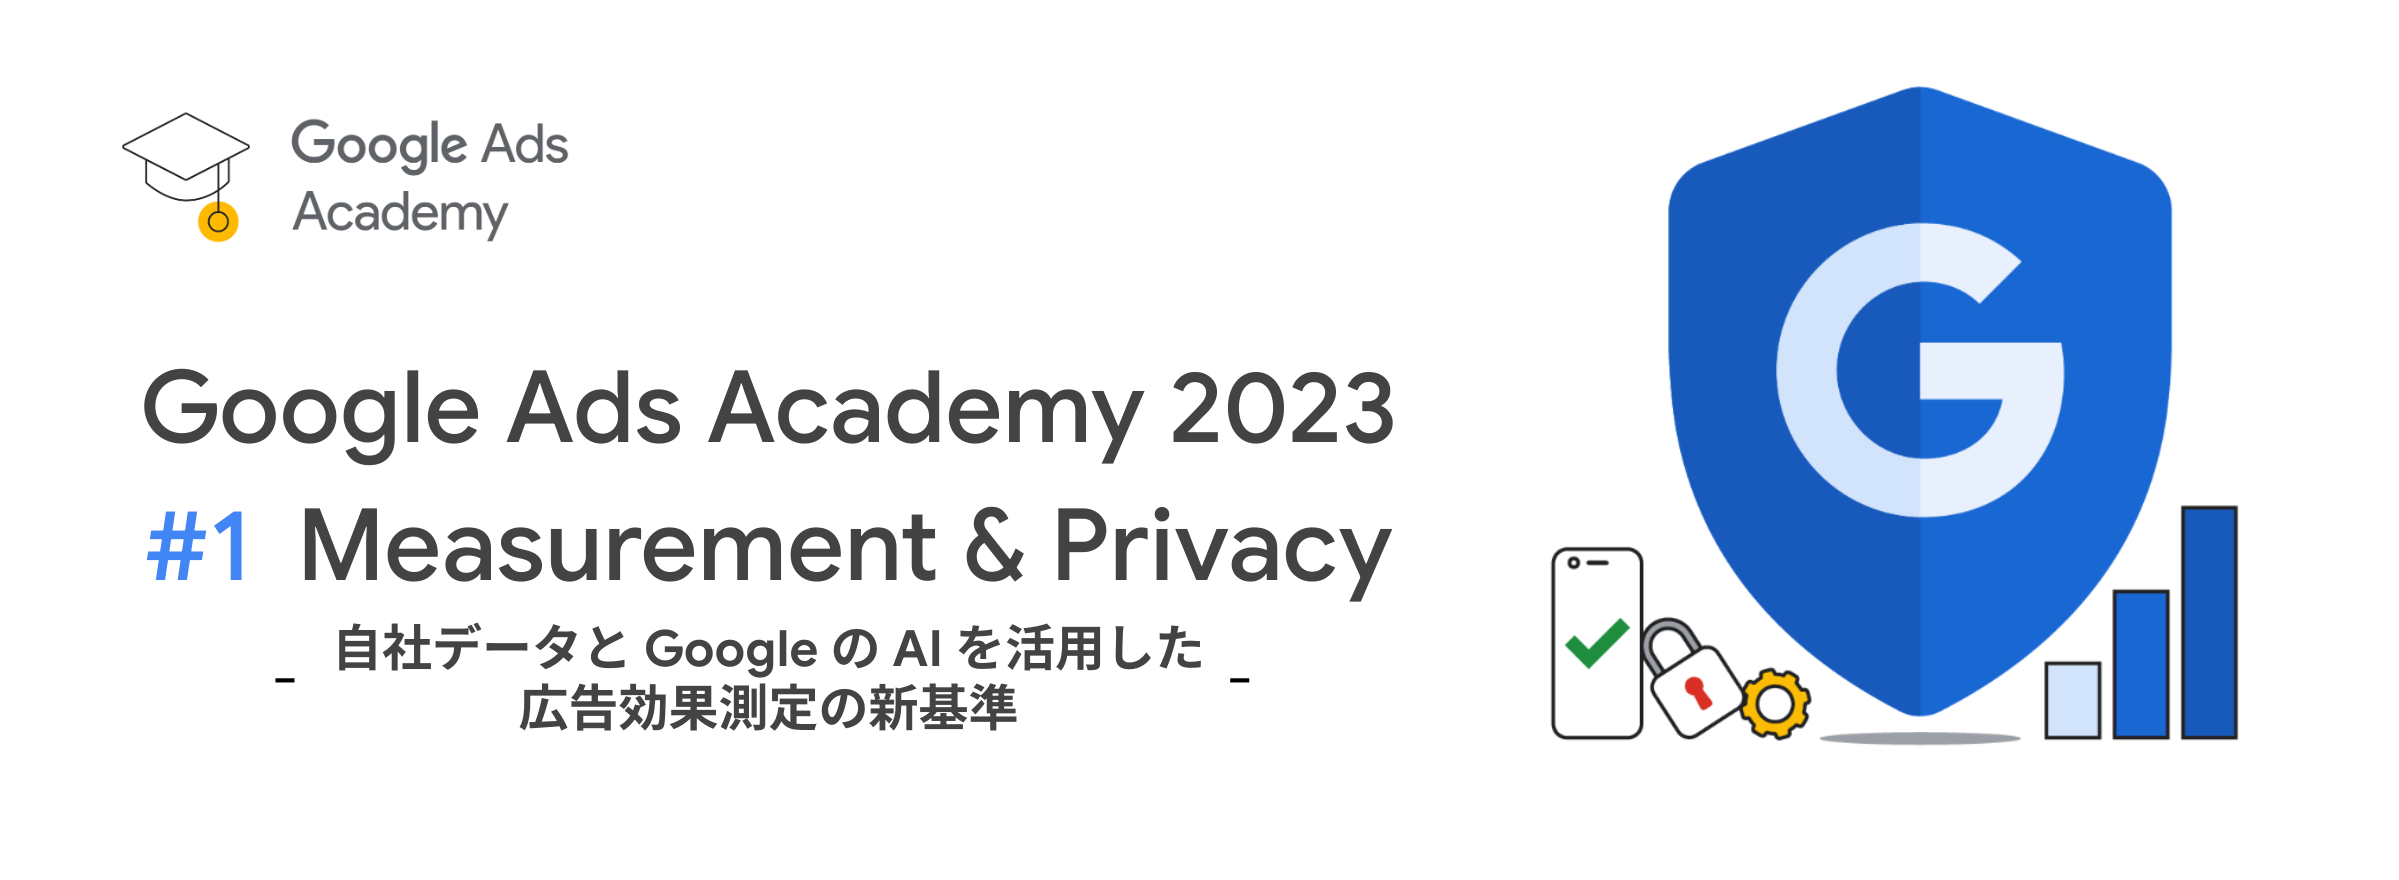 [Google Ads] Google Ads Academy 2023 #1 Measurement & Privacy - 自社データと Google の AI を活用した広告効果測定の新基準 -